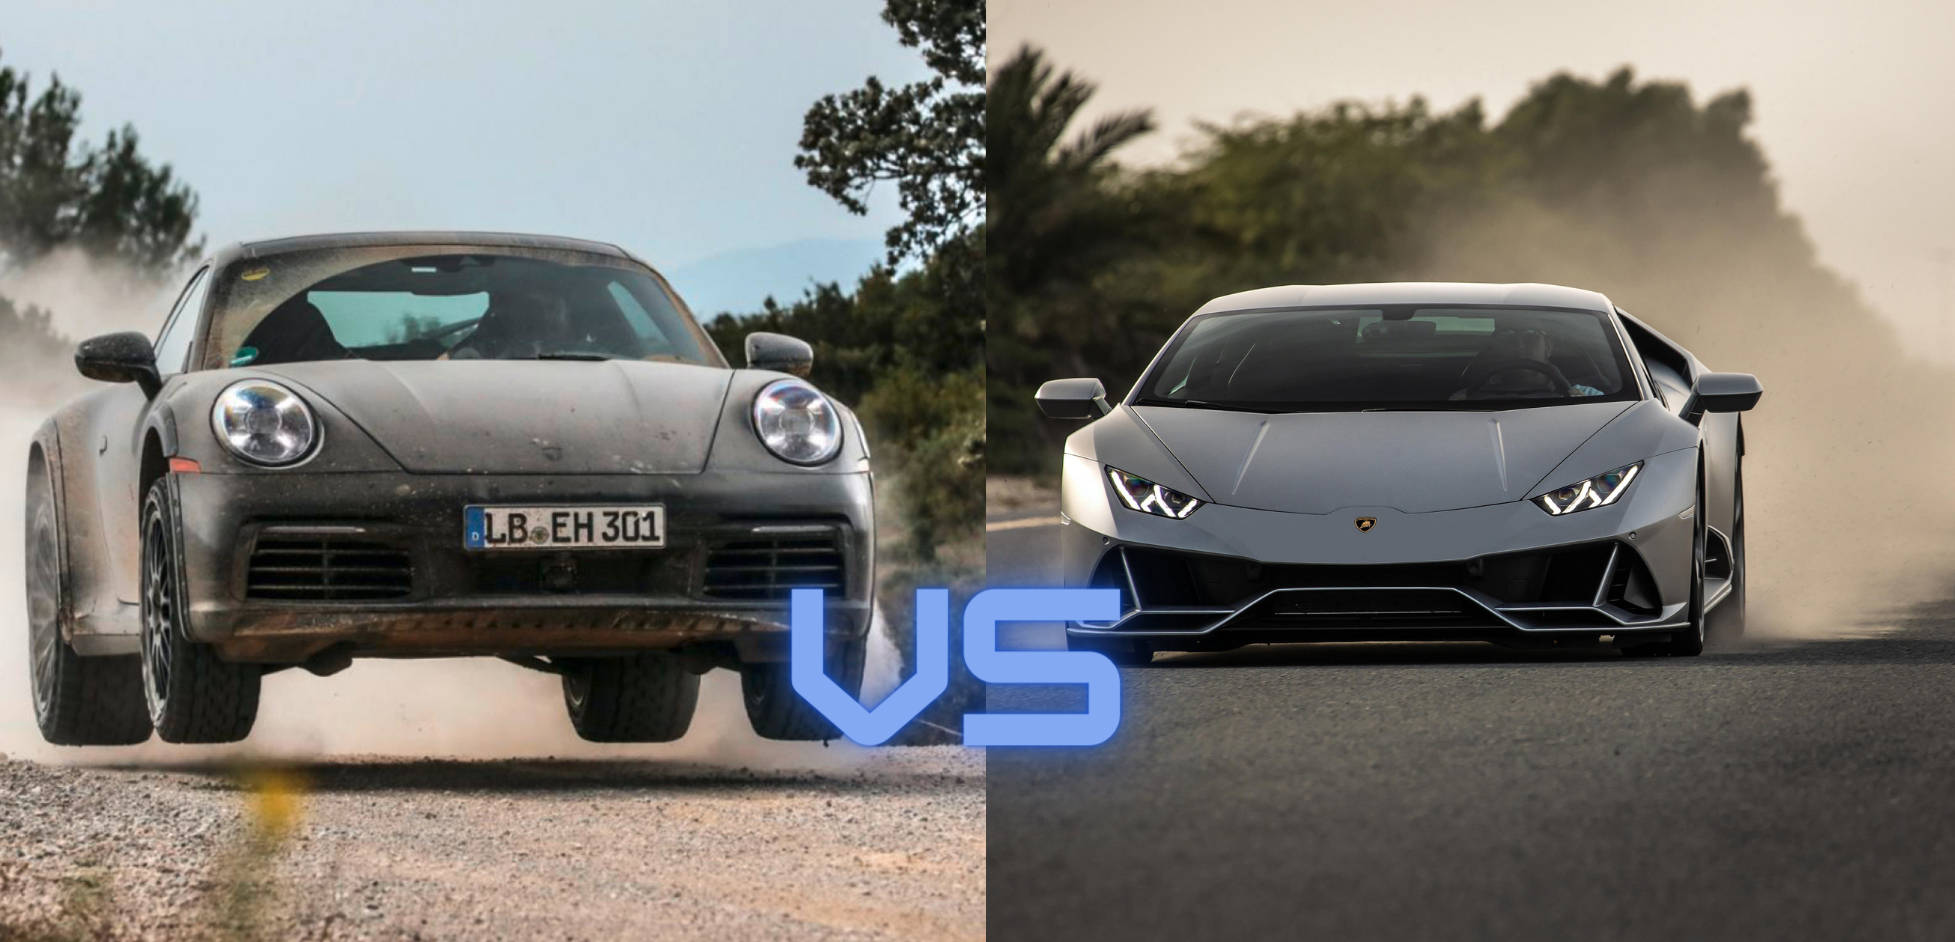 Lamborghini huracán vs porsche 911: a technical comparison